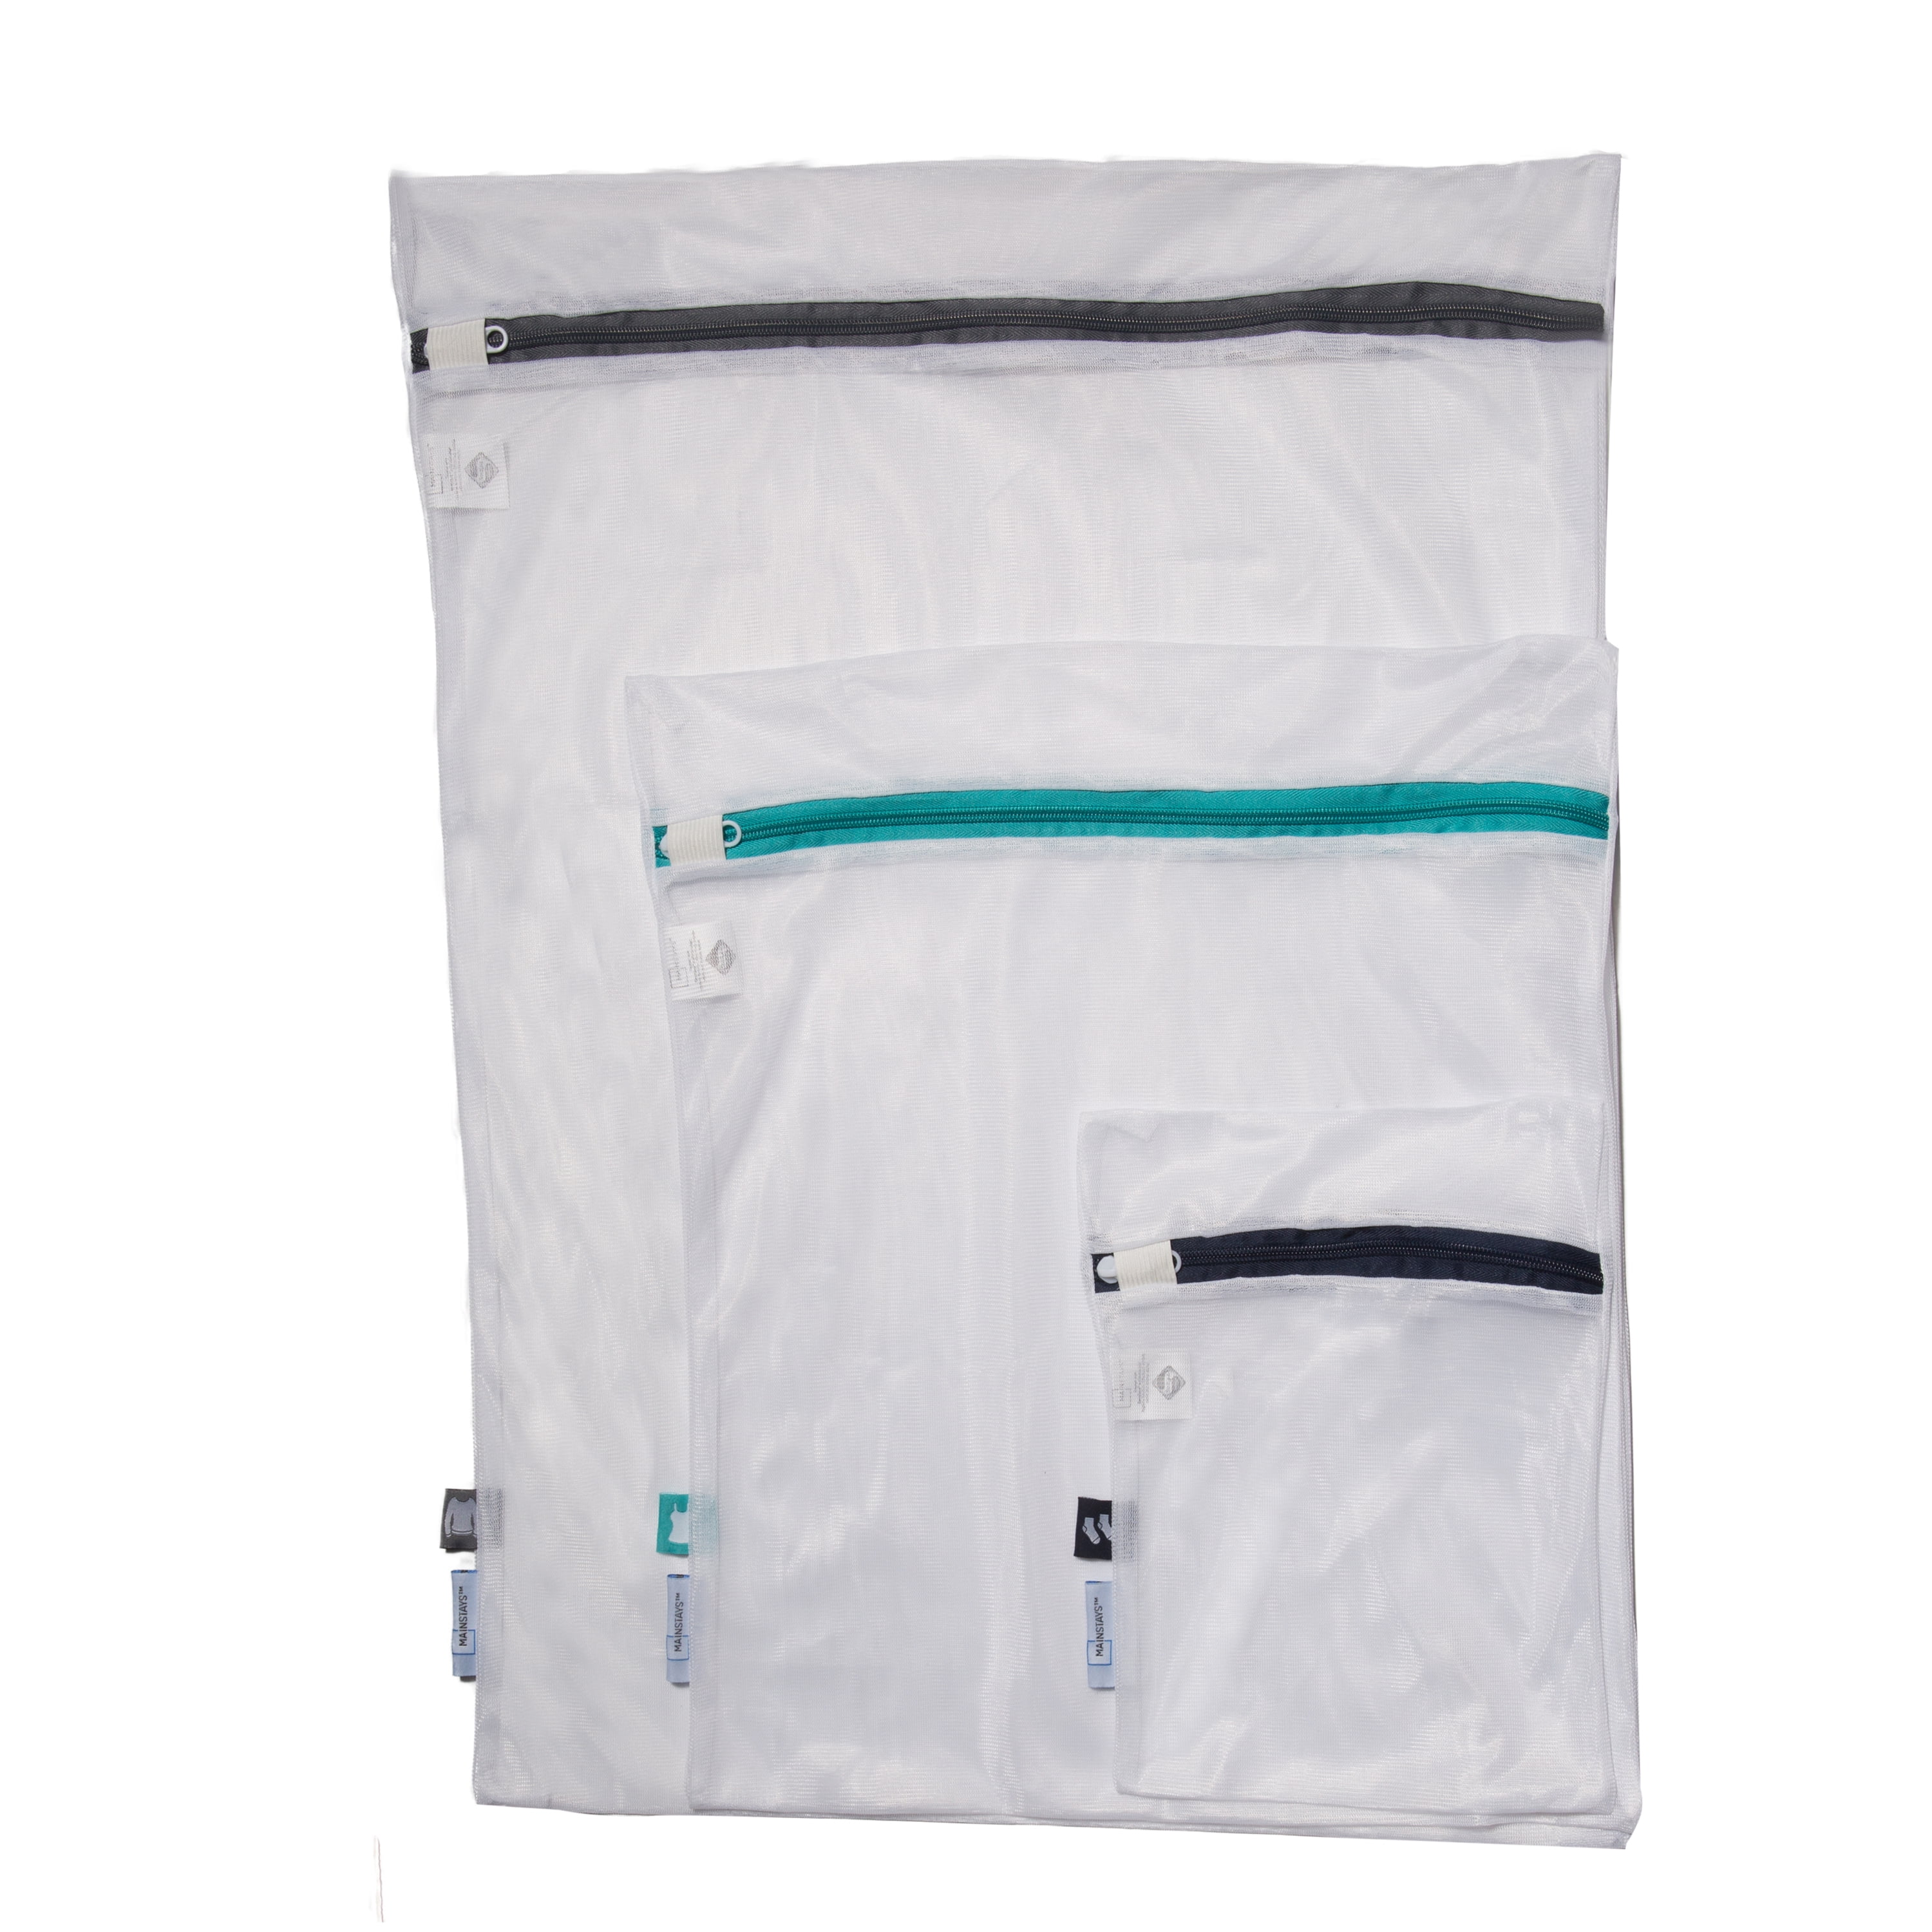 Heritage Park Premium Fine Mesh Laundry Bags Multi Pack (1 Small 1 Large)